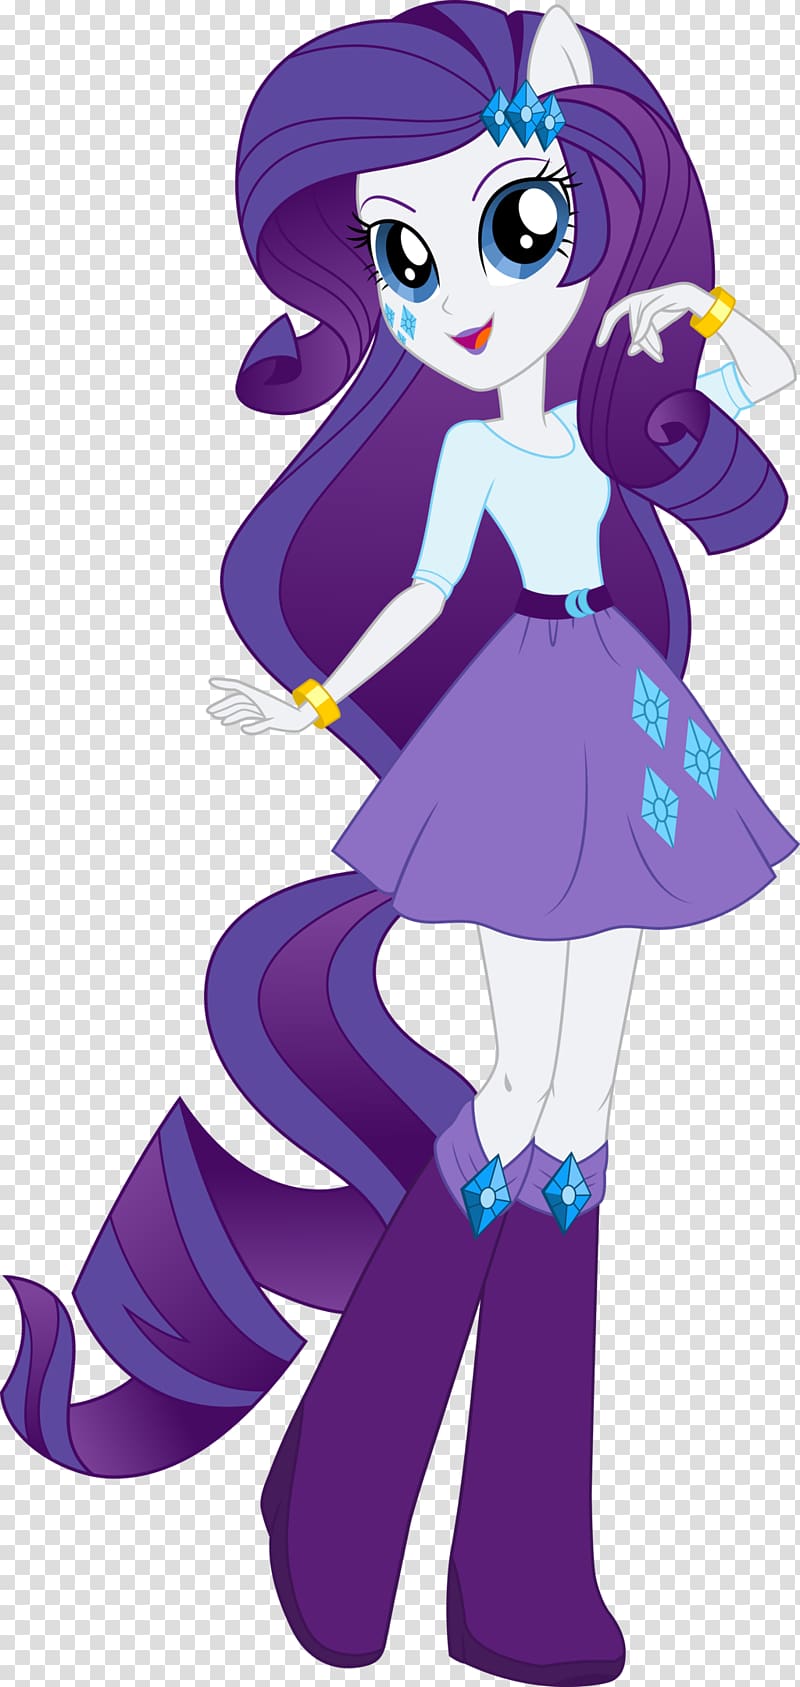 Rarity Rainbow Dash Twilight Sparkle Pony Princess Luna, Rarity Equestria Girls Polyvore transparent background PNG clipart